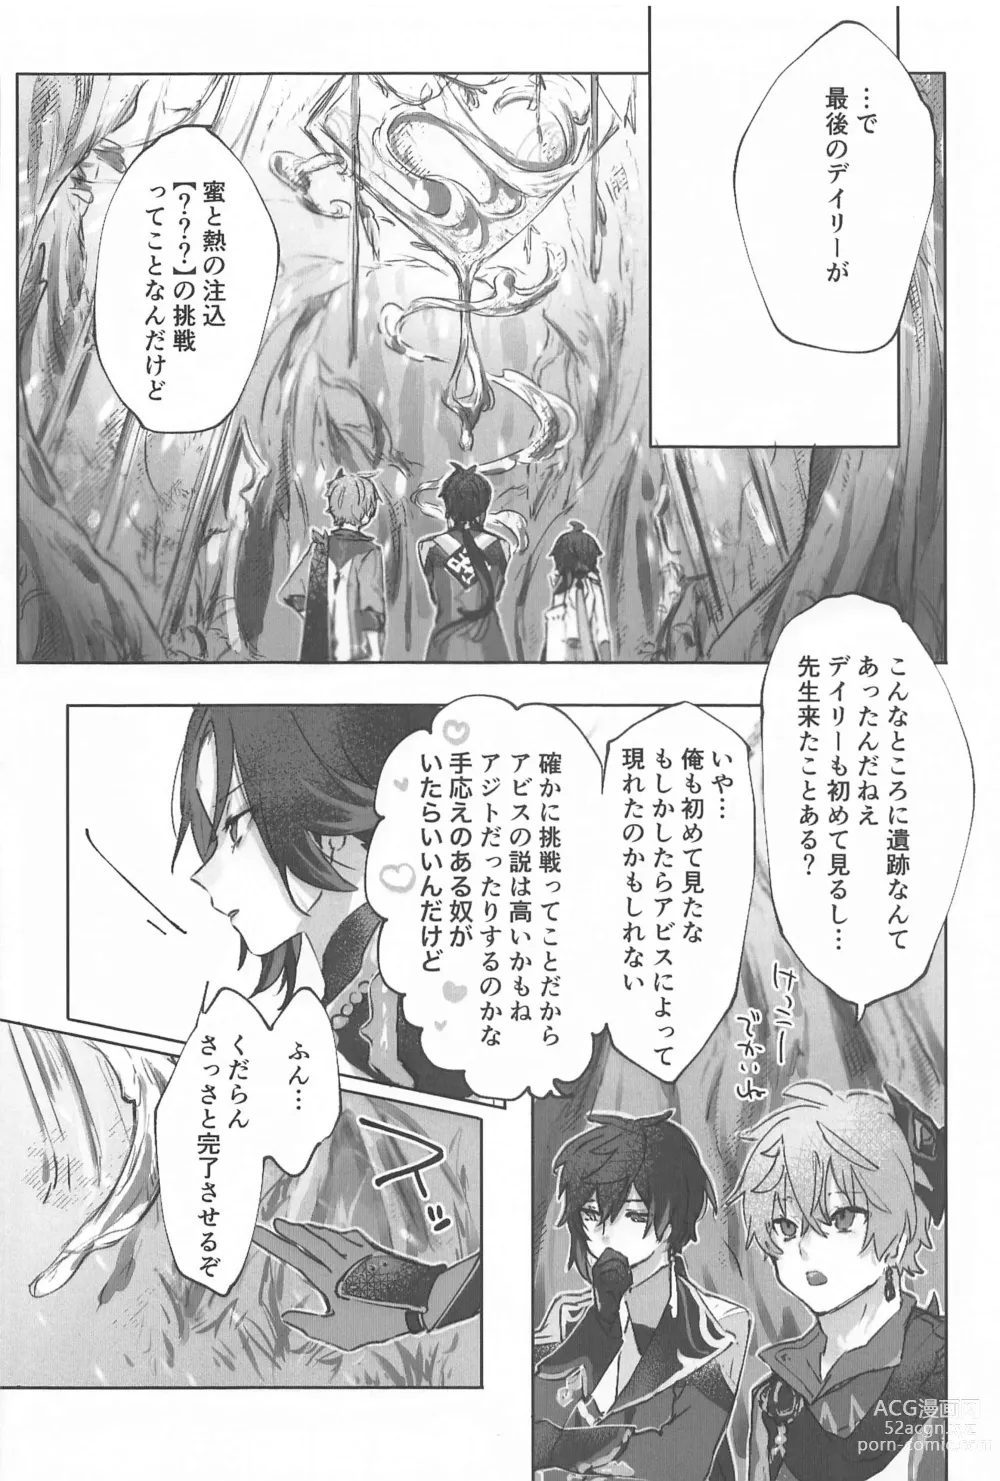 Page 10 of doujinshi Okawari.